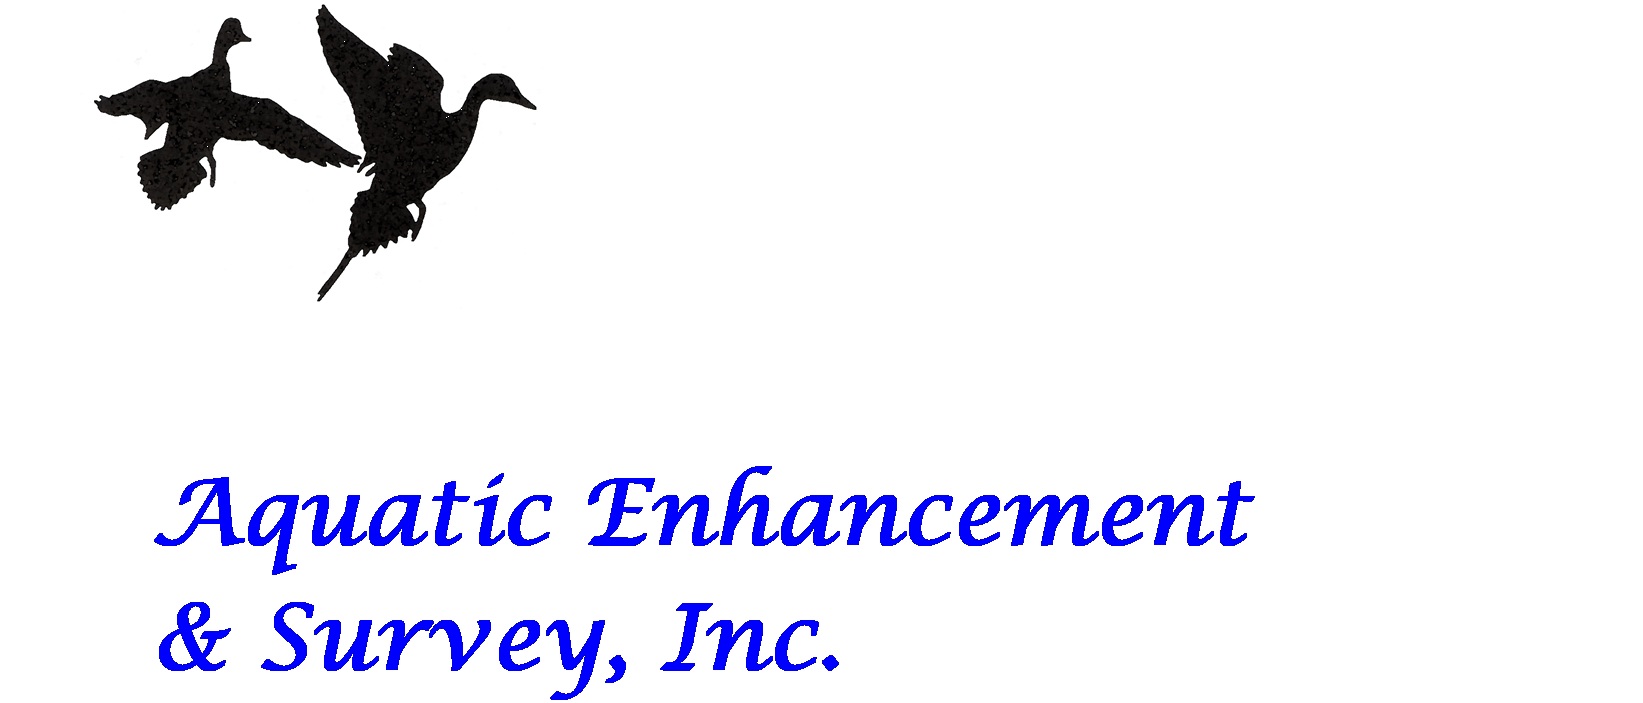 Aquatic Enhancement & Survey, Inc. Logo